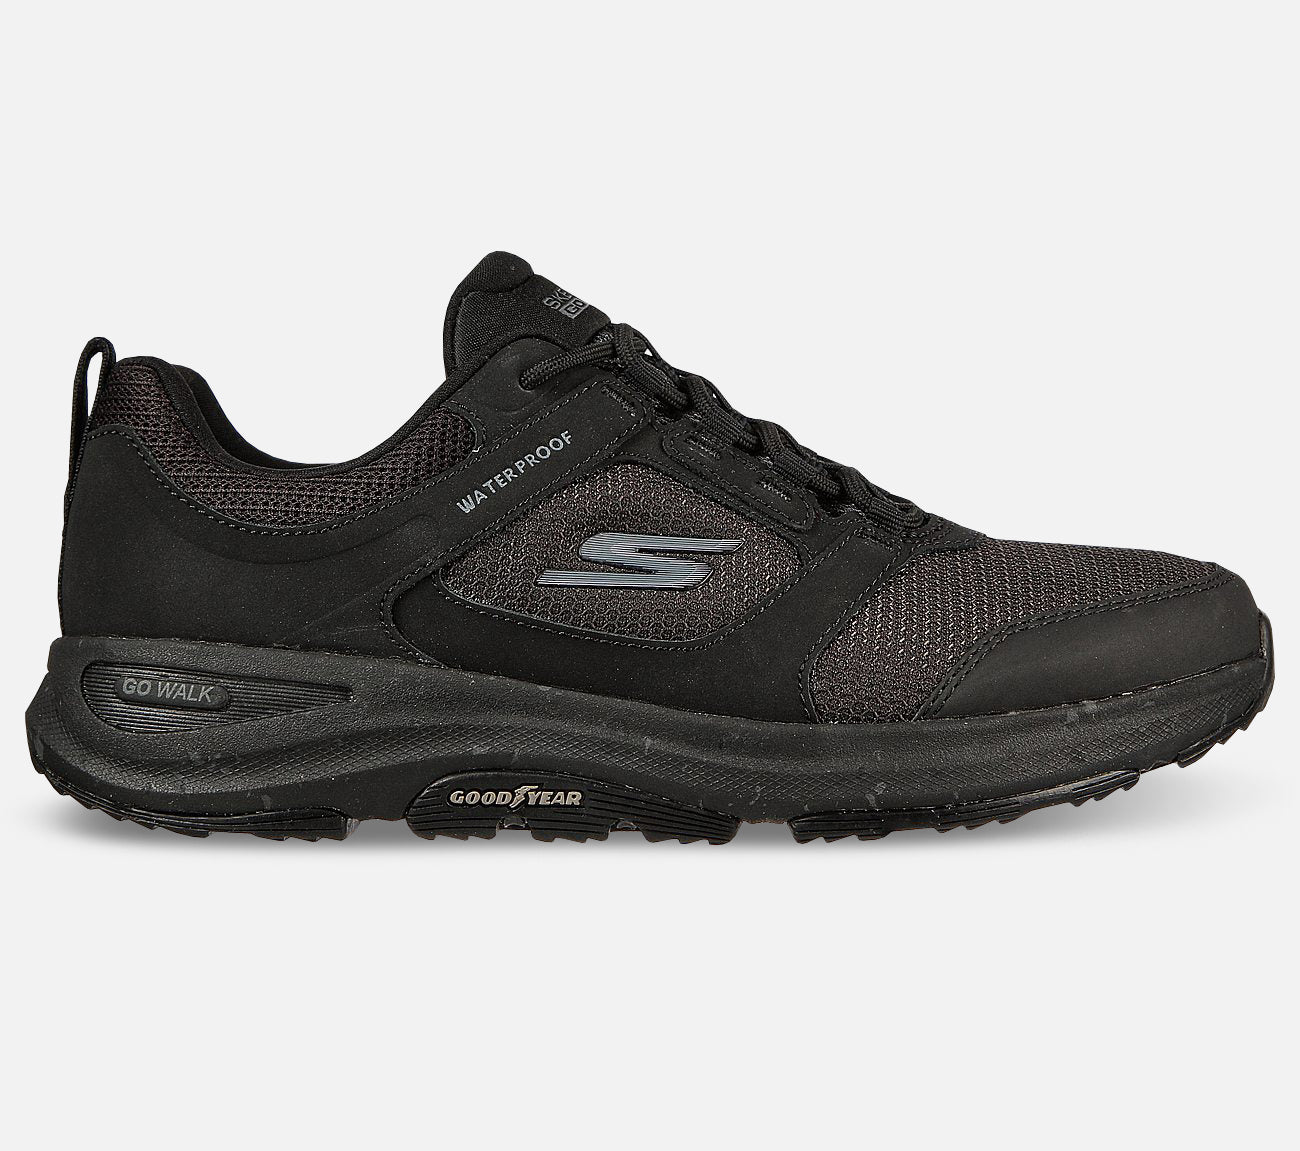 GO WALK Outdoors – River Patch Waterproof Shoe Skechers